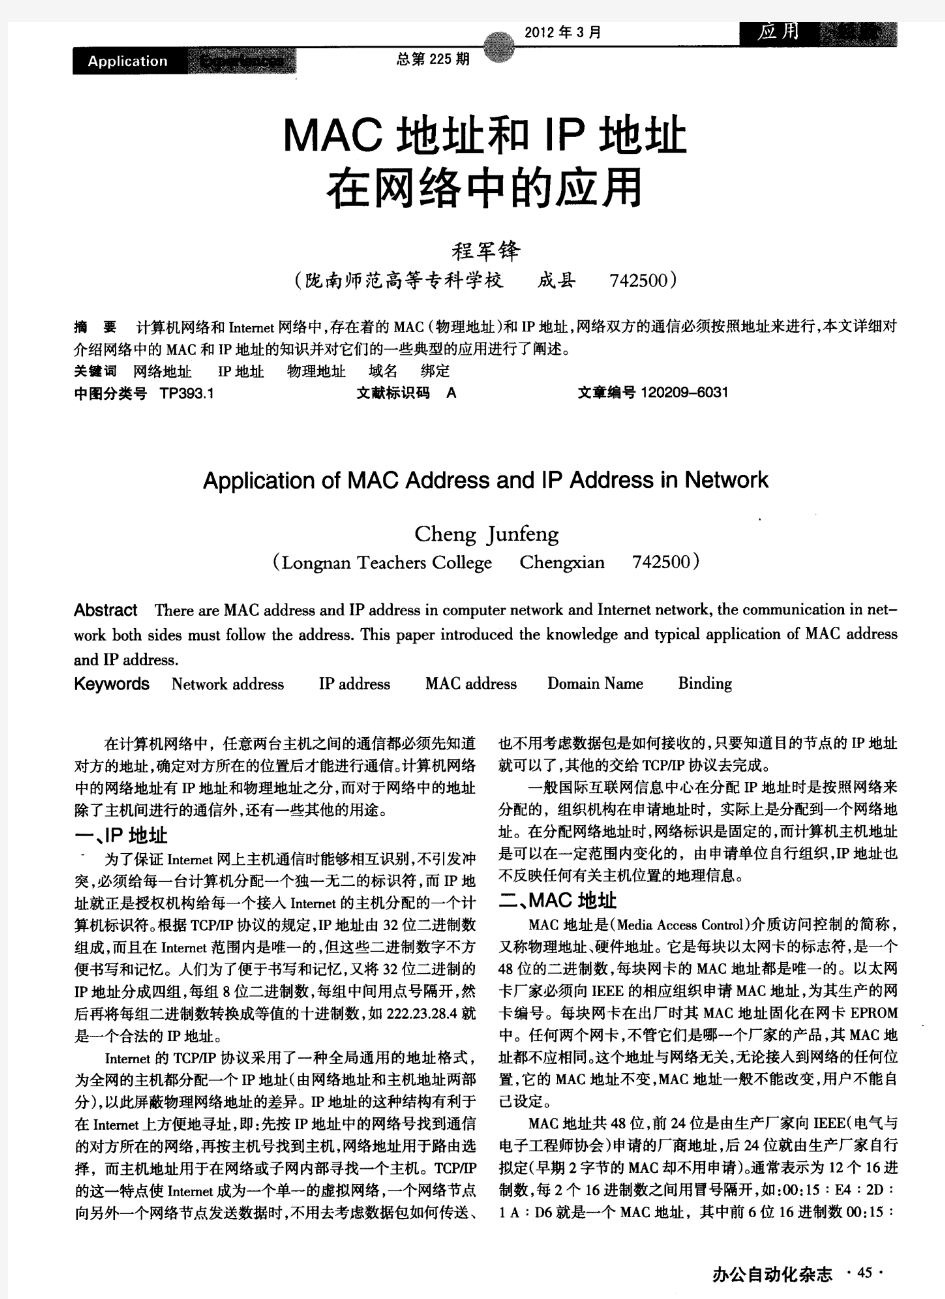 MAC地址和IP地址在网络中的应用